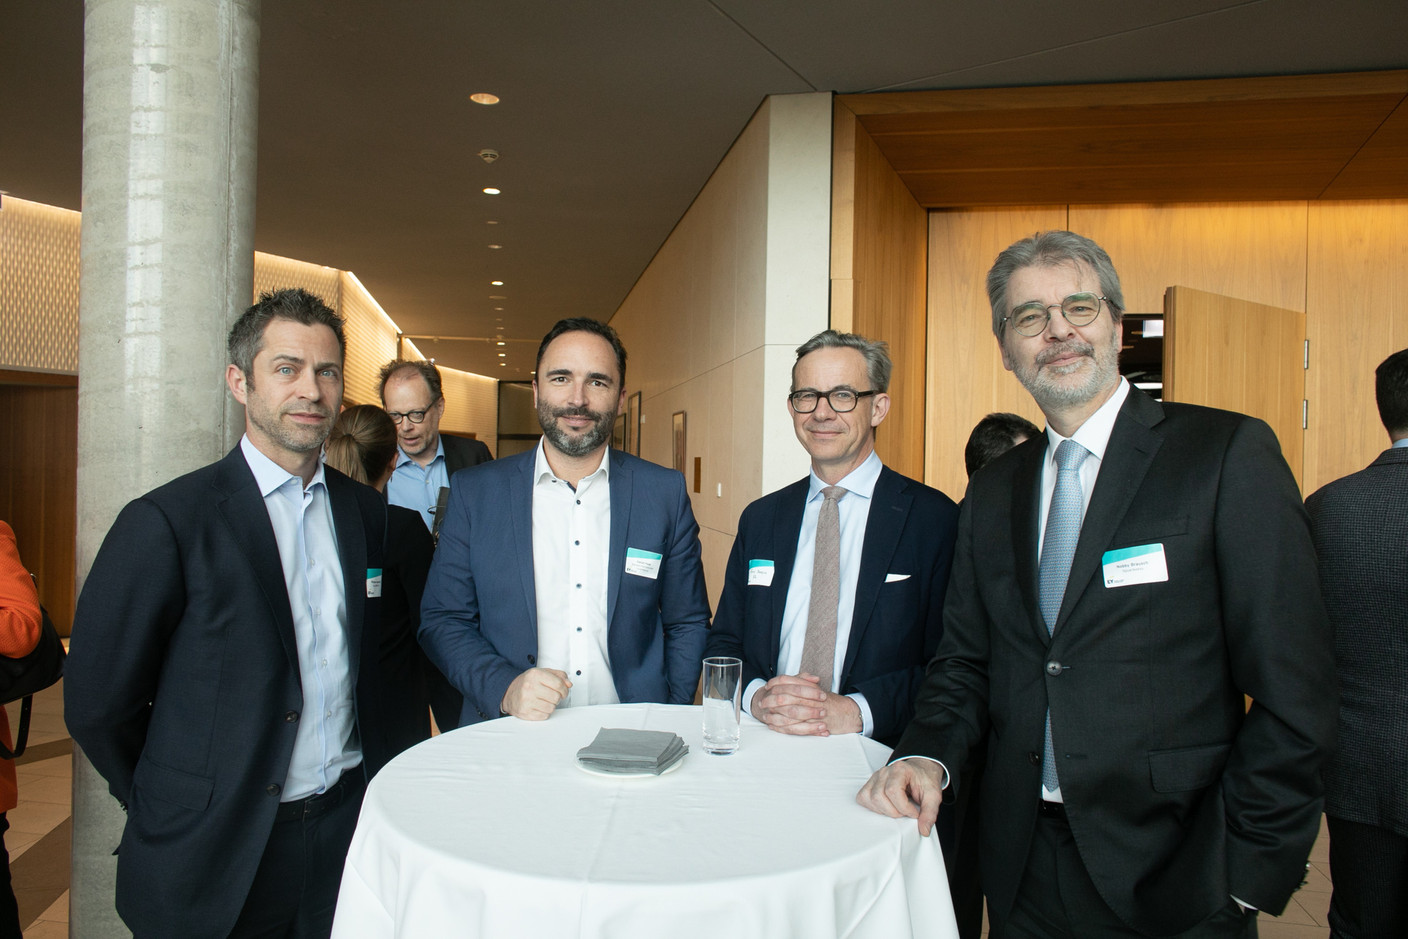 Daniel Haag (2nd from left), Banque Internationale Luxembourg; Nobby Brausch (right), Spuerkeess. Photo: Matic Zorman / Maison Moderne